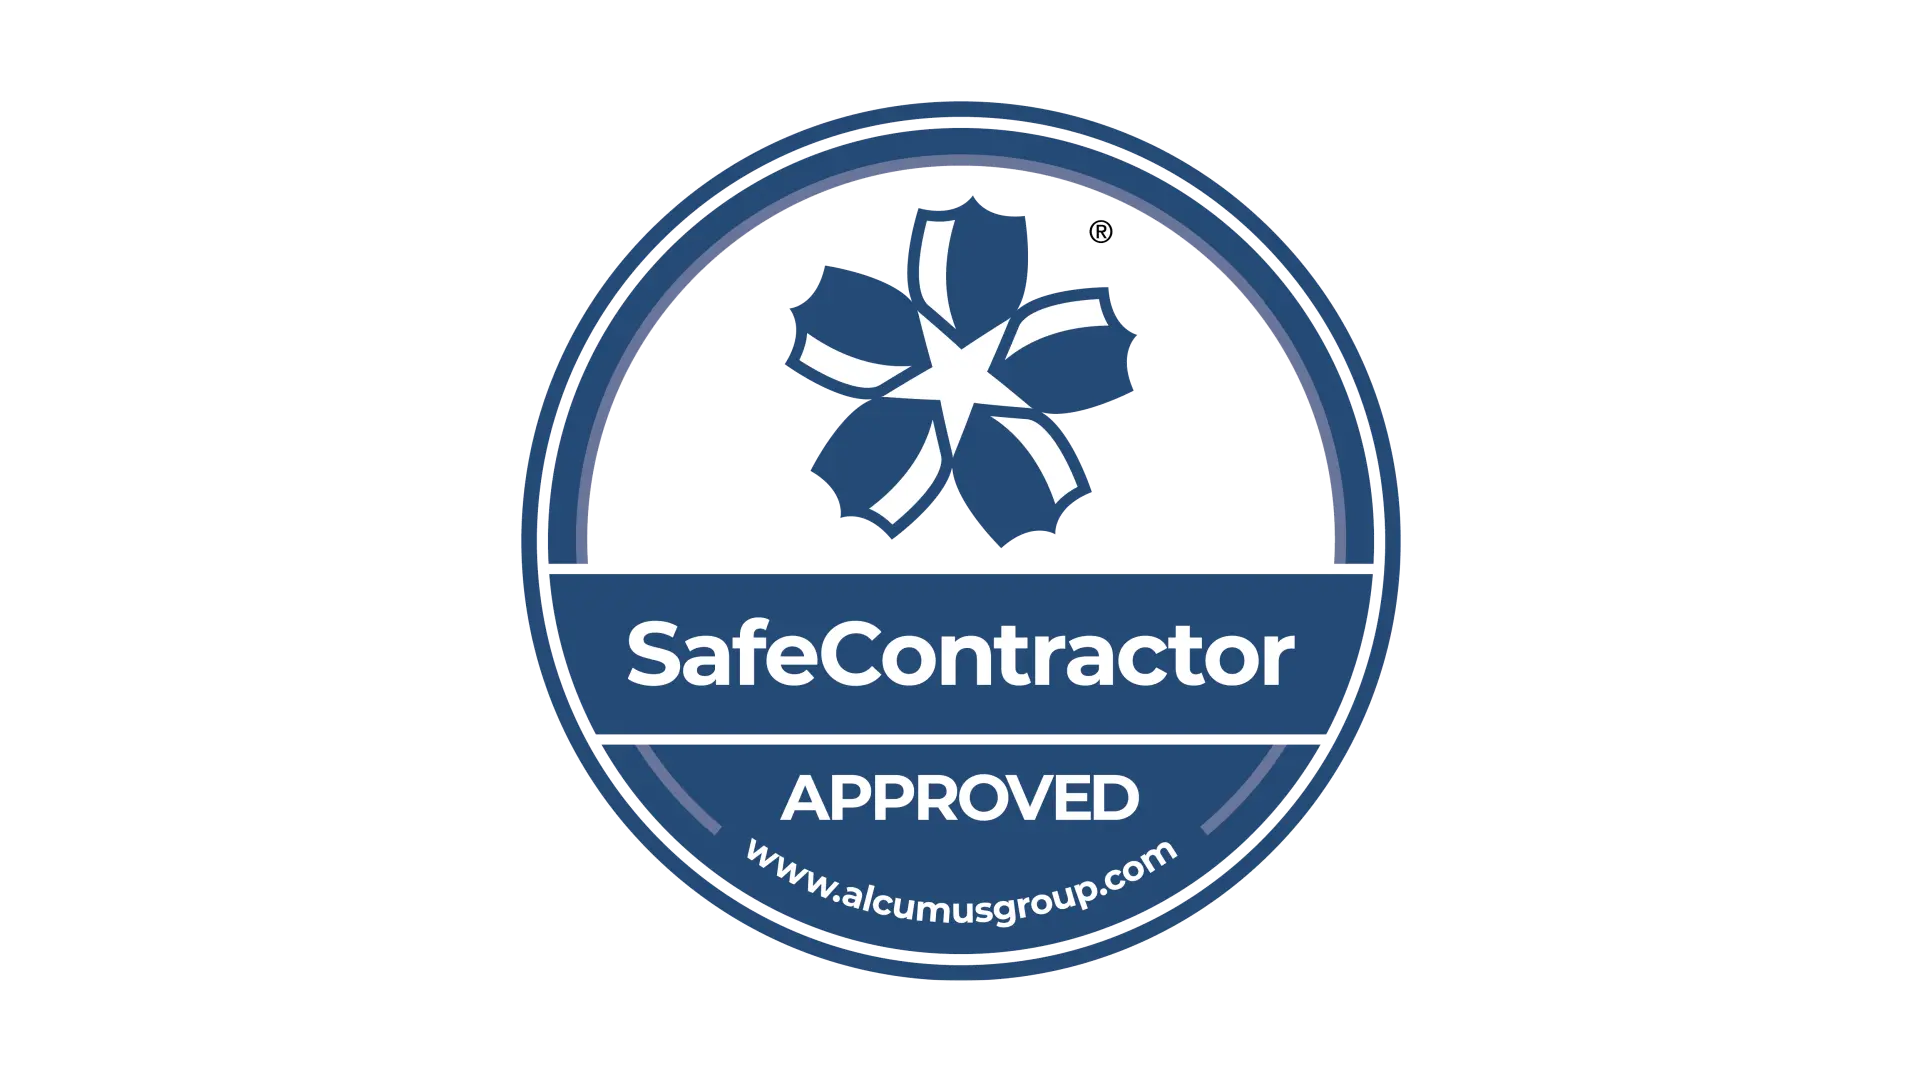 Alcumus Safe Contractor Logo